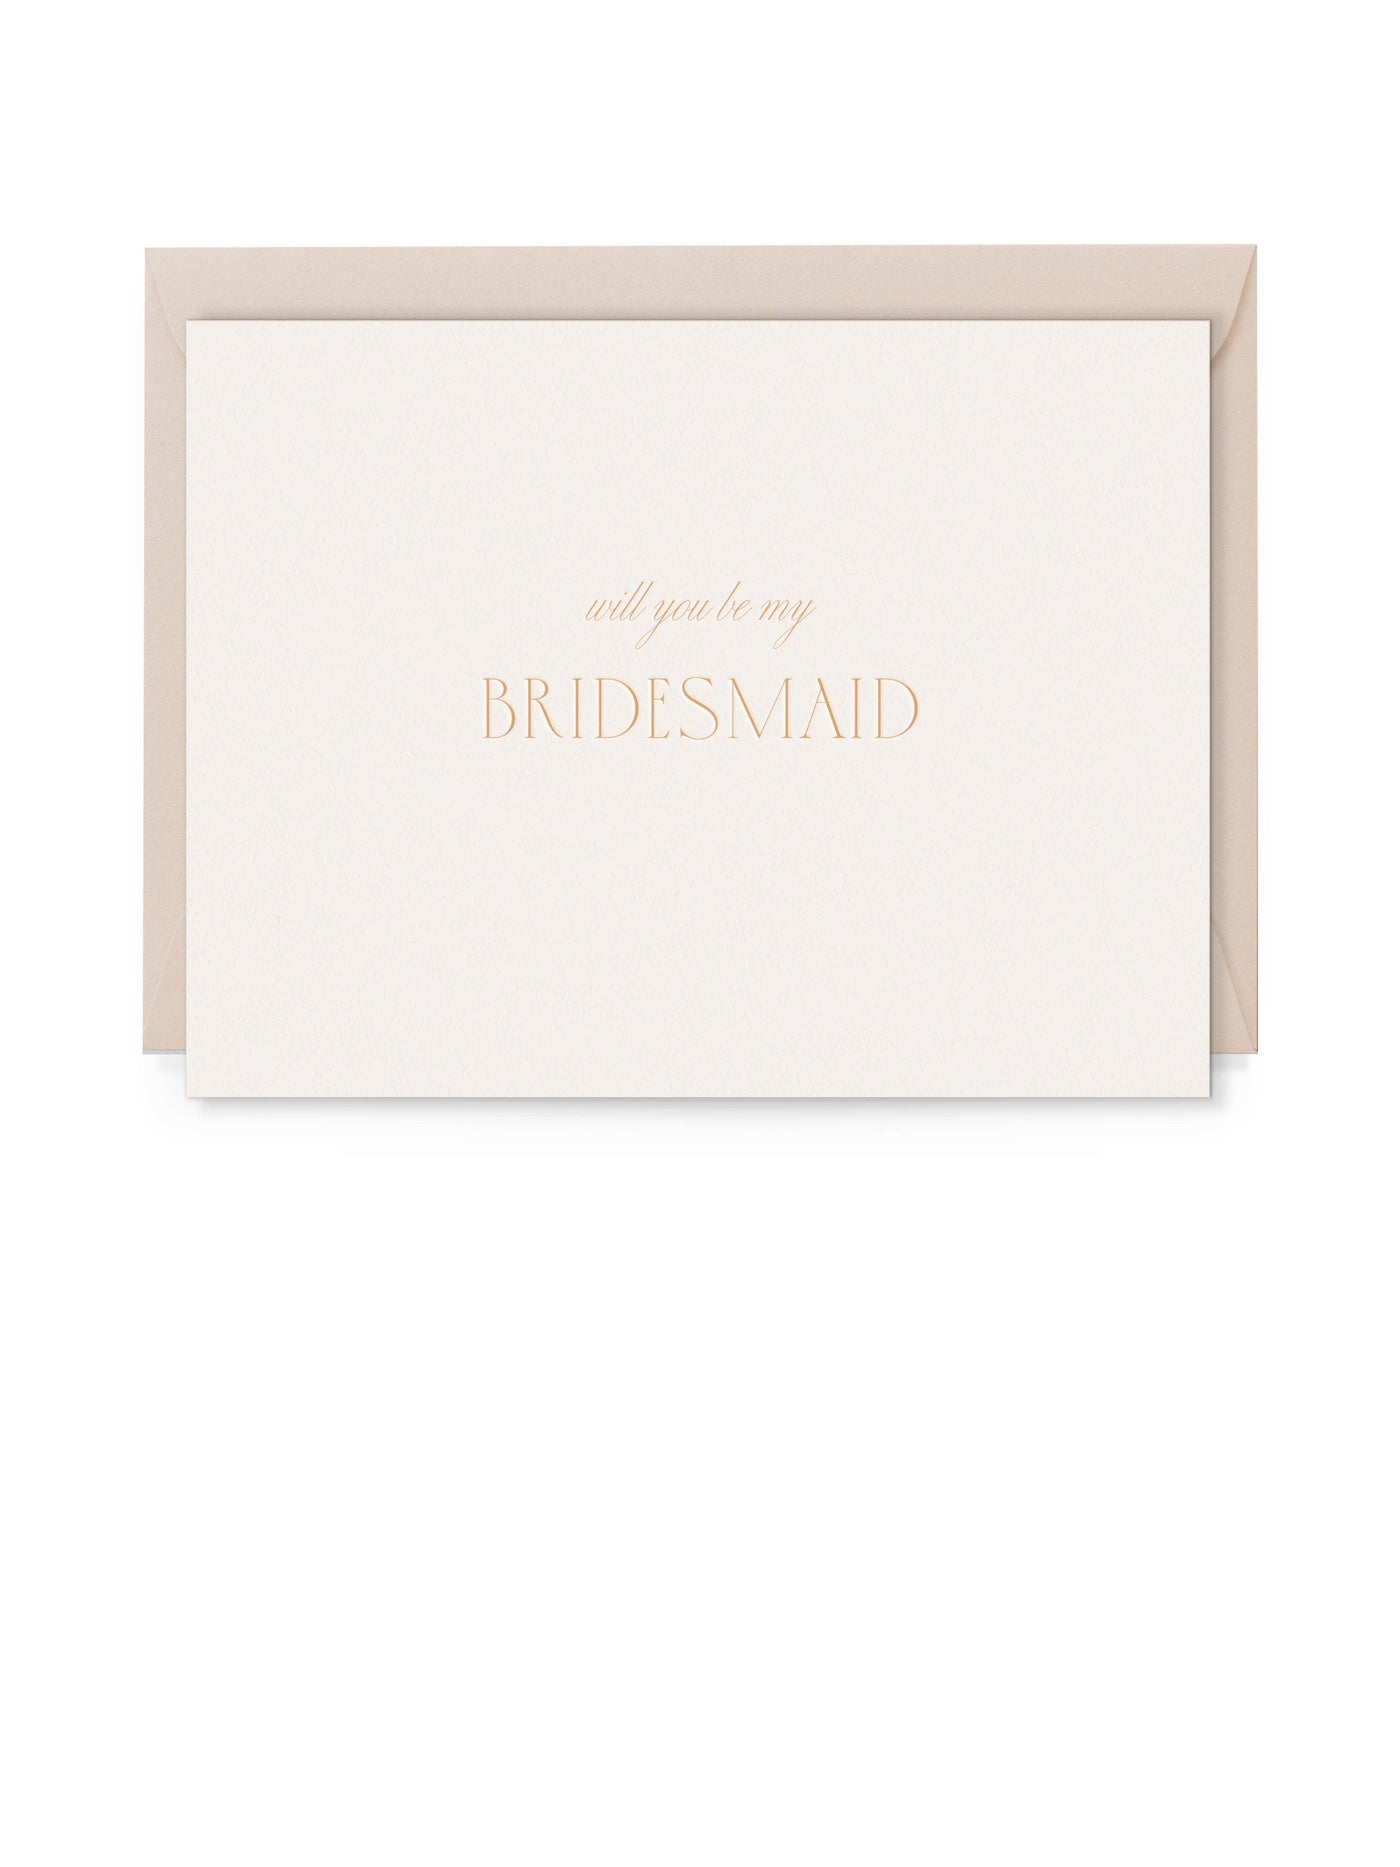 Bridesmaid Proposal Card - Foil